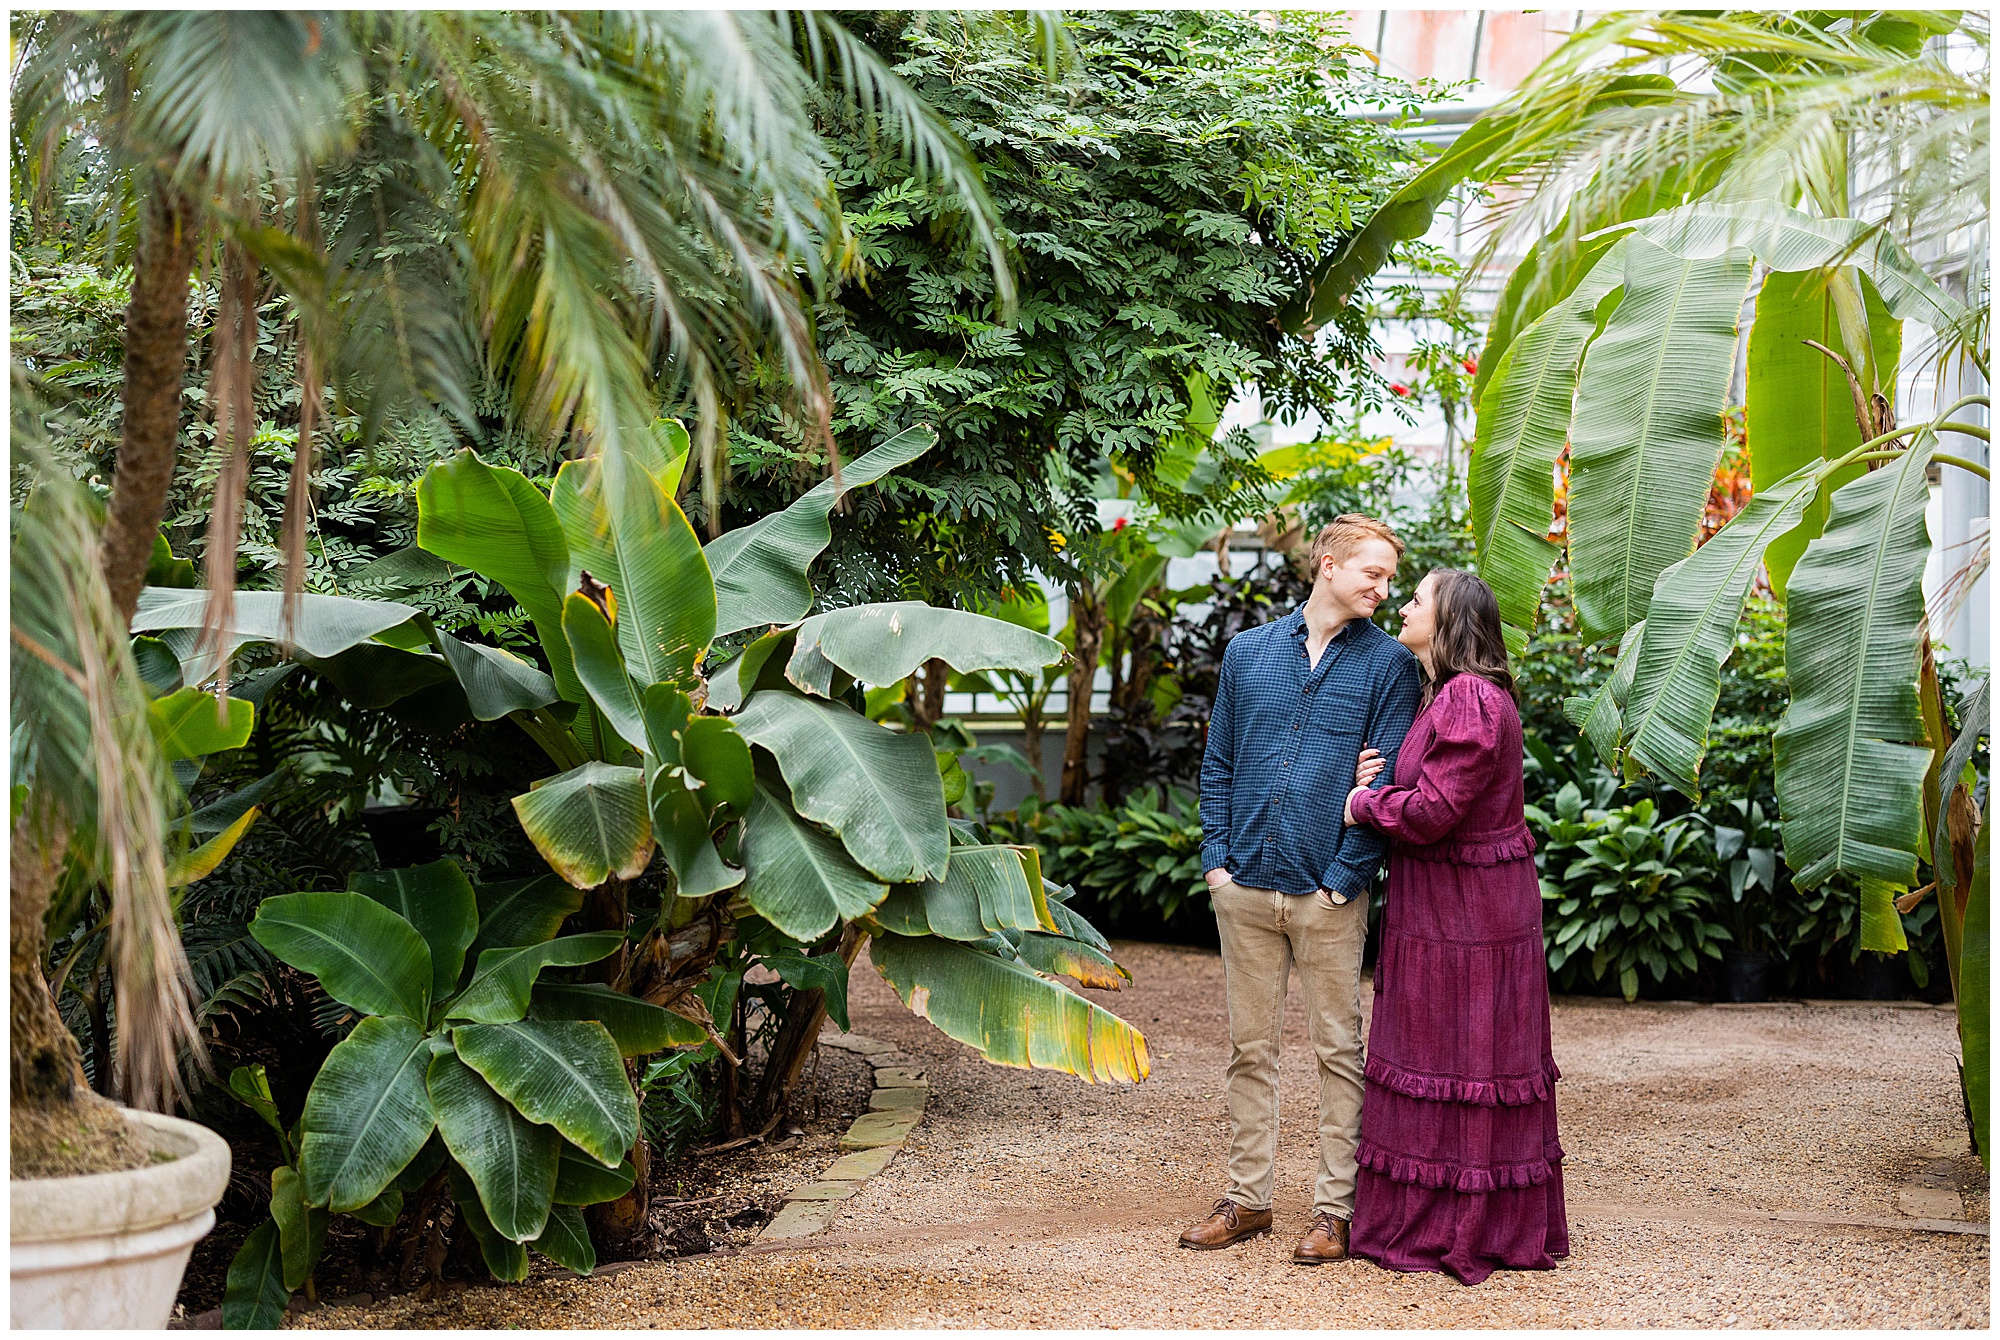 Eleanor Stenner Photography - a Birmingham, Alabama Wedding Photographer - photographed the future Codobas at the Birmingham Botanical Gardens